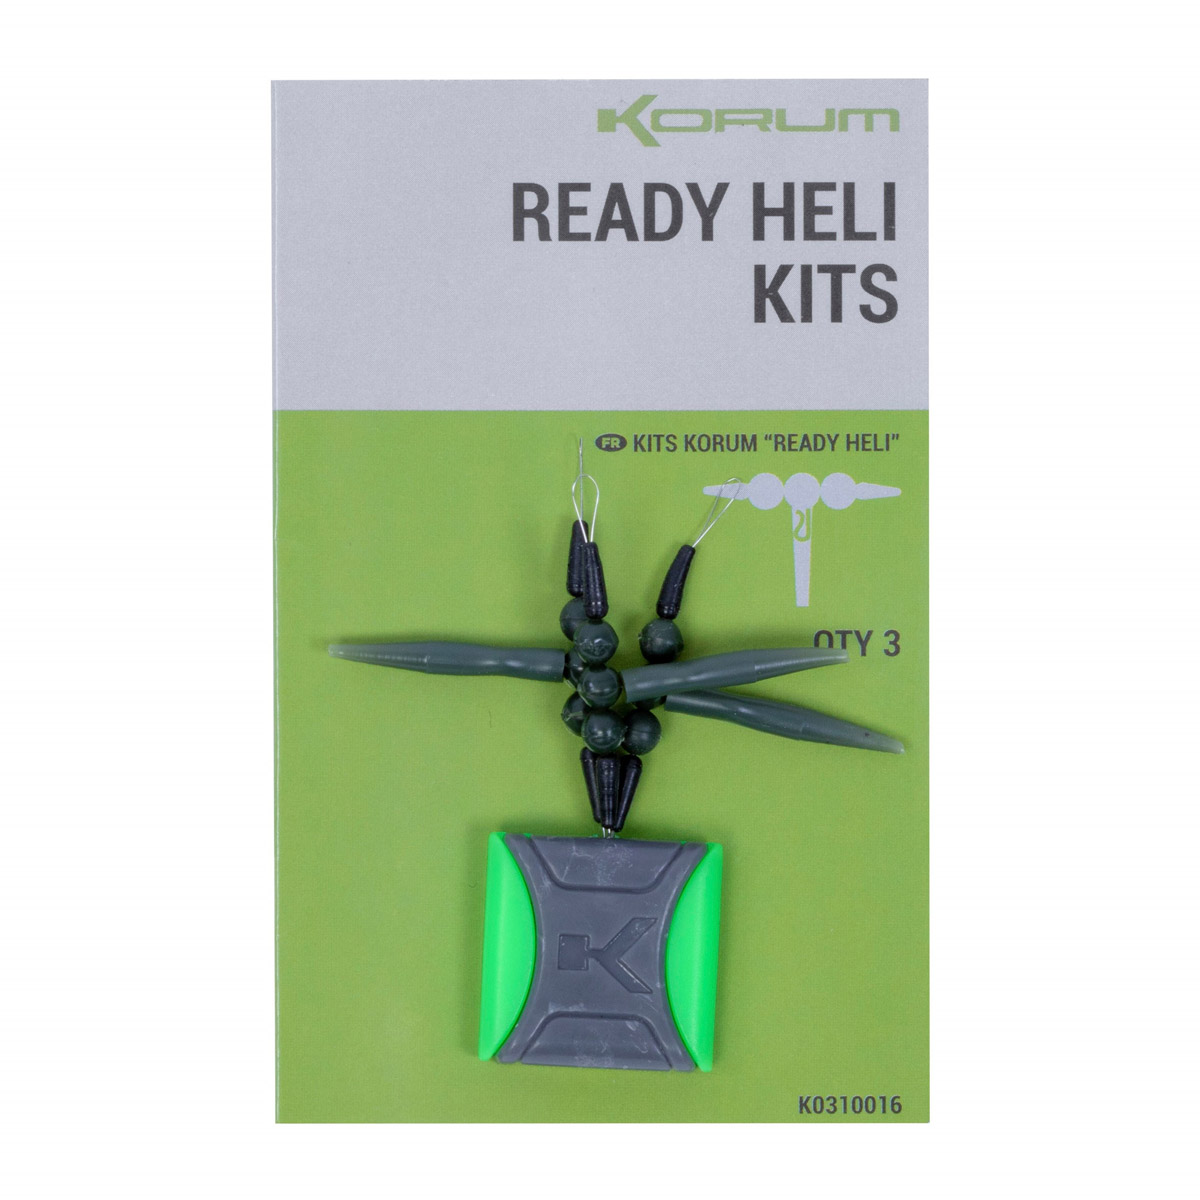 Korum Ready Heli-Kits